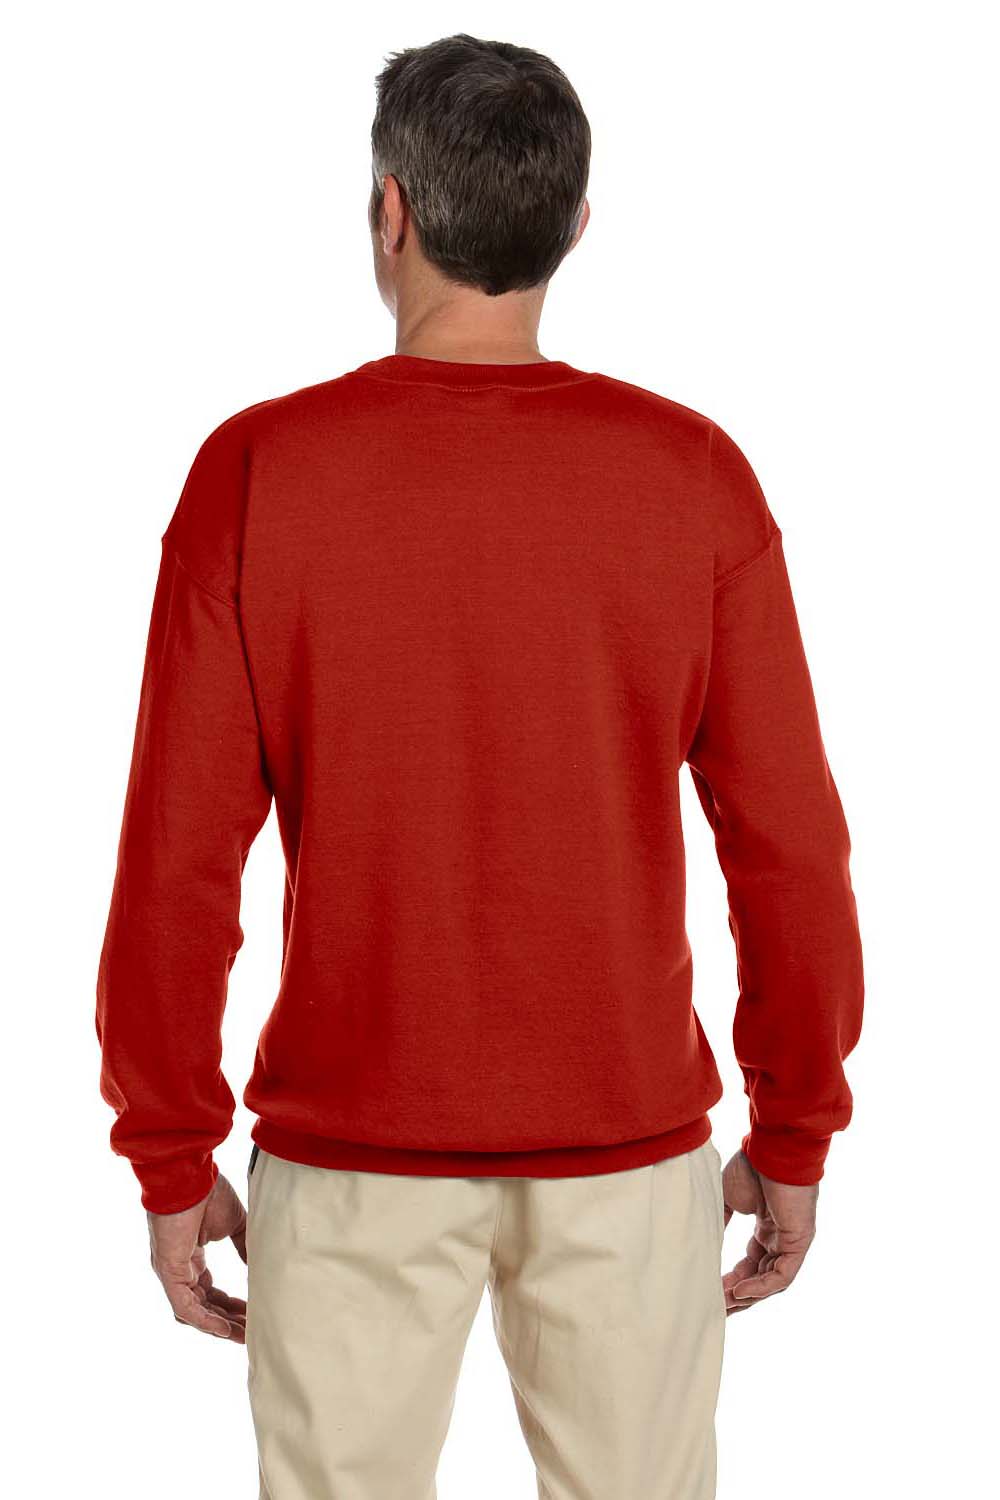 Hanes F260 Mens Ultimate Cotton PrintPro XP Crewneck Sweatshirt Red Back